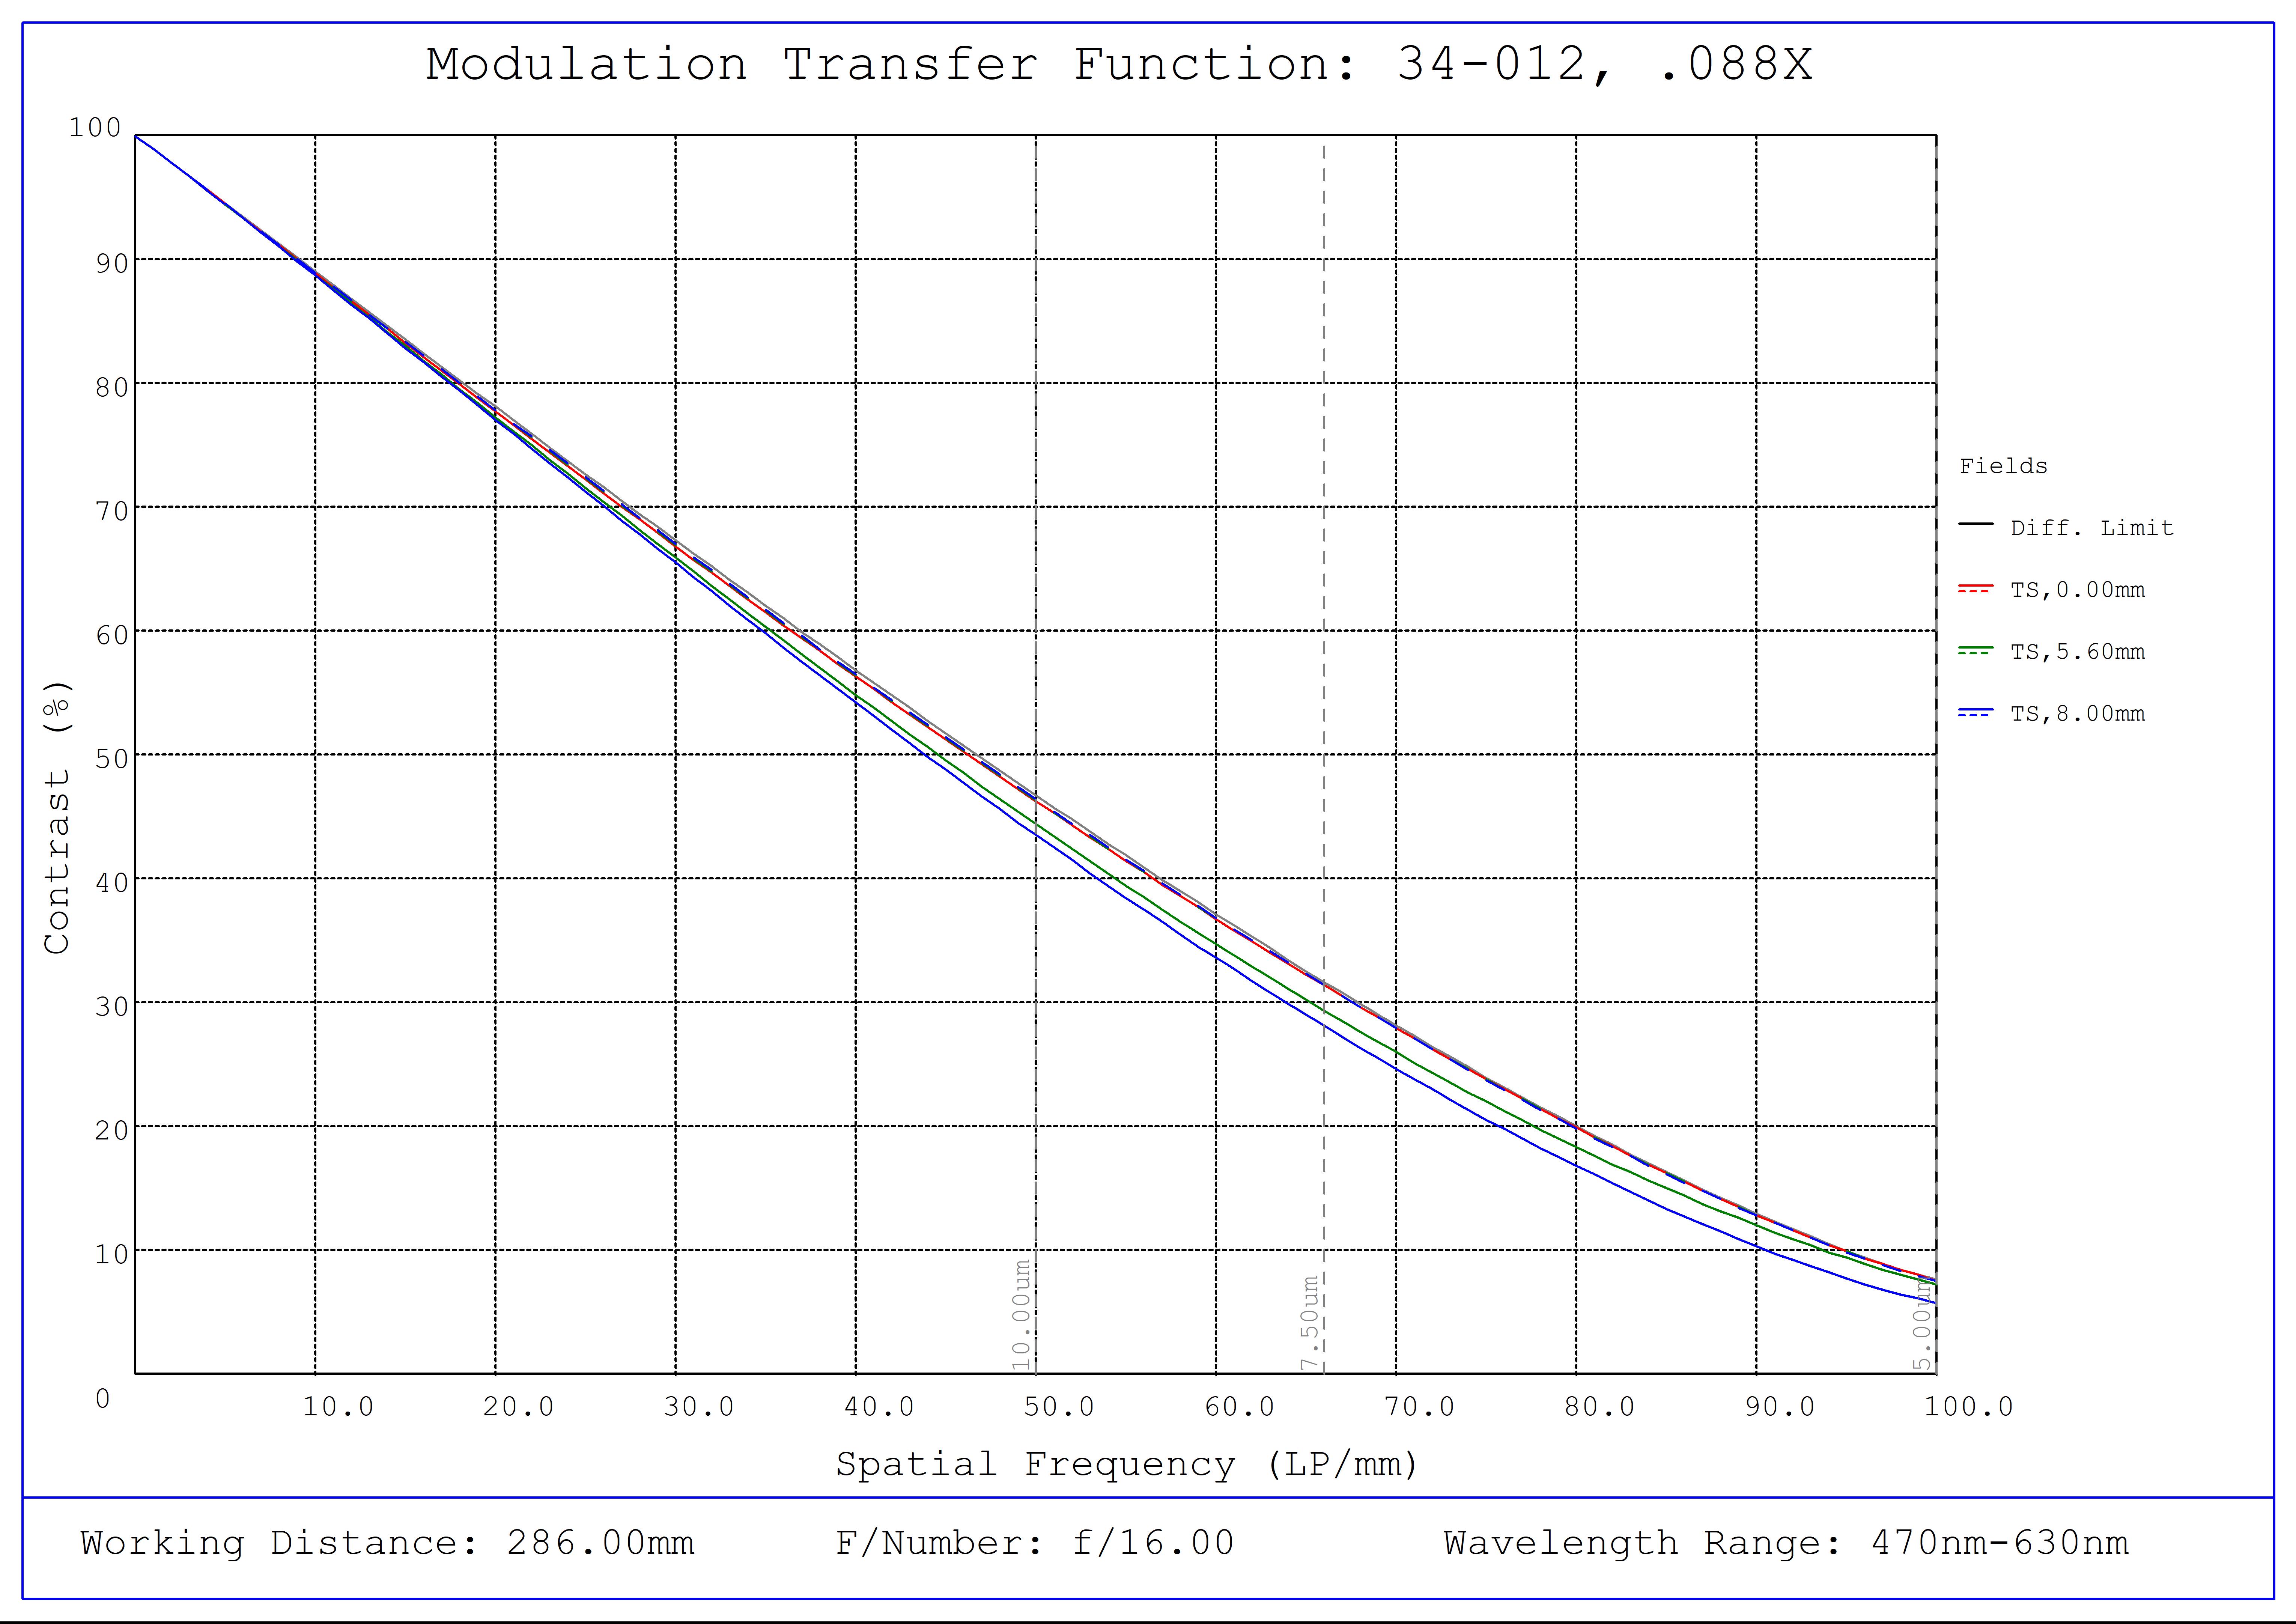 #34-012, 0.088X, 1" C-Mount TitanTL® Telecentric Lens, Modulated Transfer Function (MTF) Plot, 286mm Working Distance, f16